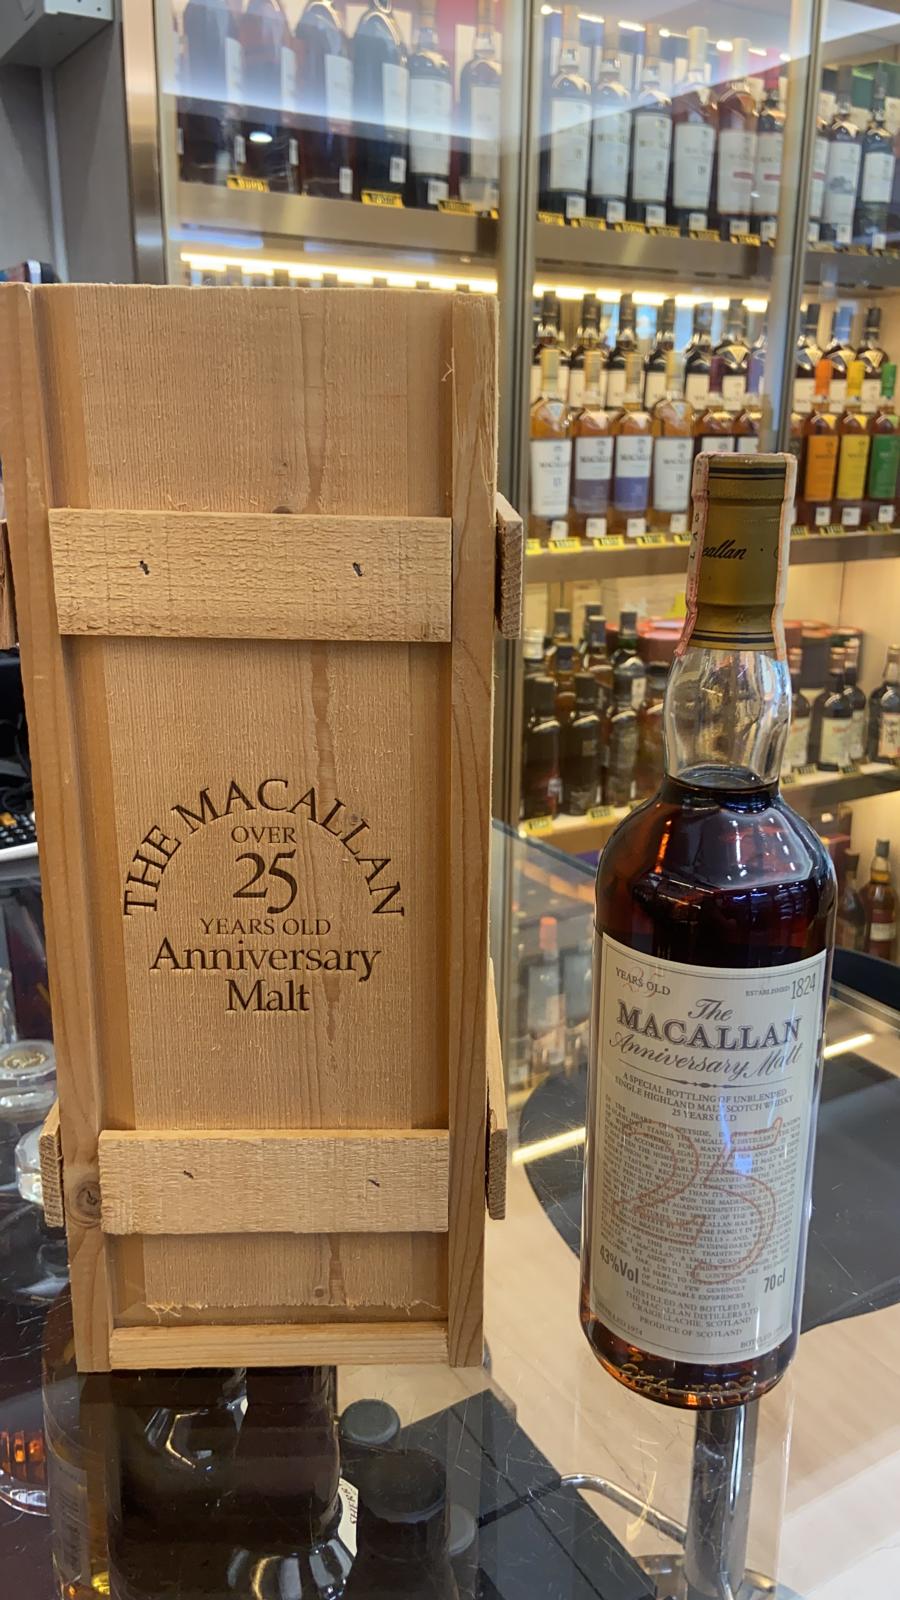 The Macallan Anniversary Malt  (1973) 25 Year Old Single Malt Scotch Whisky